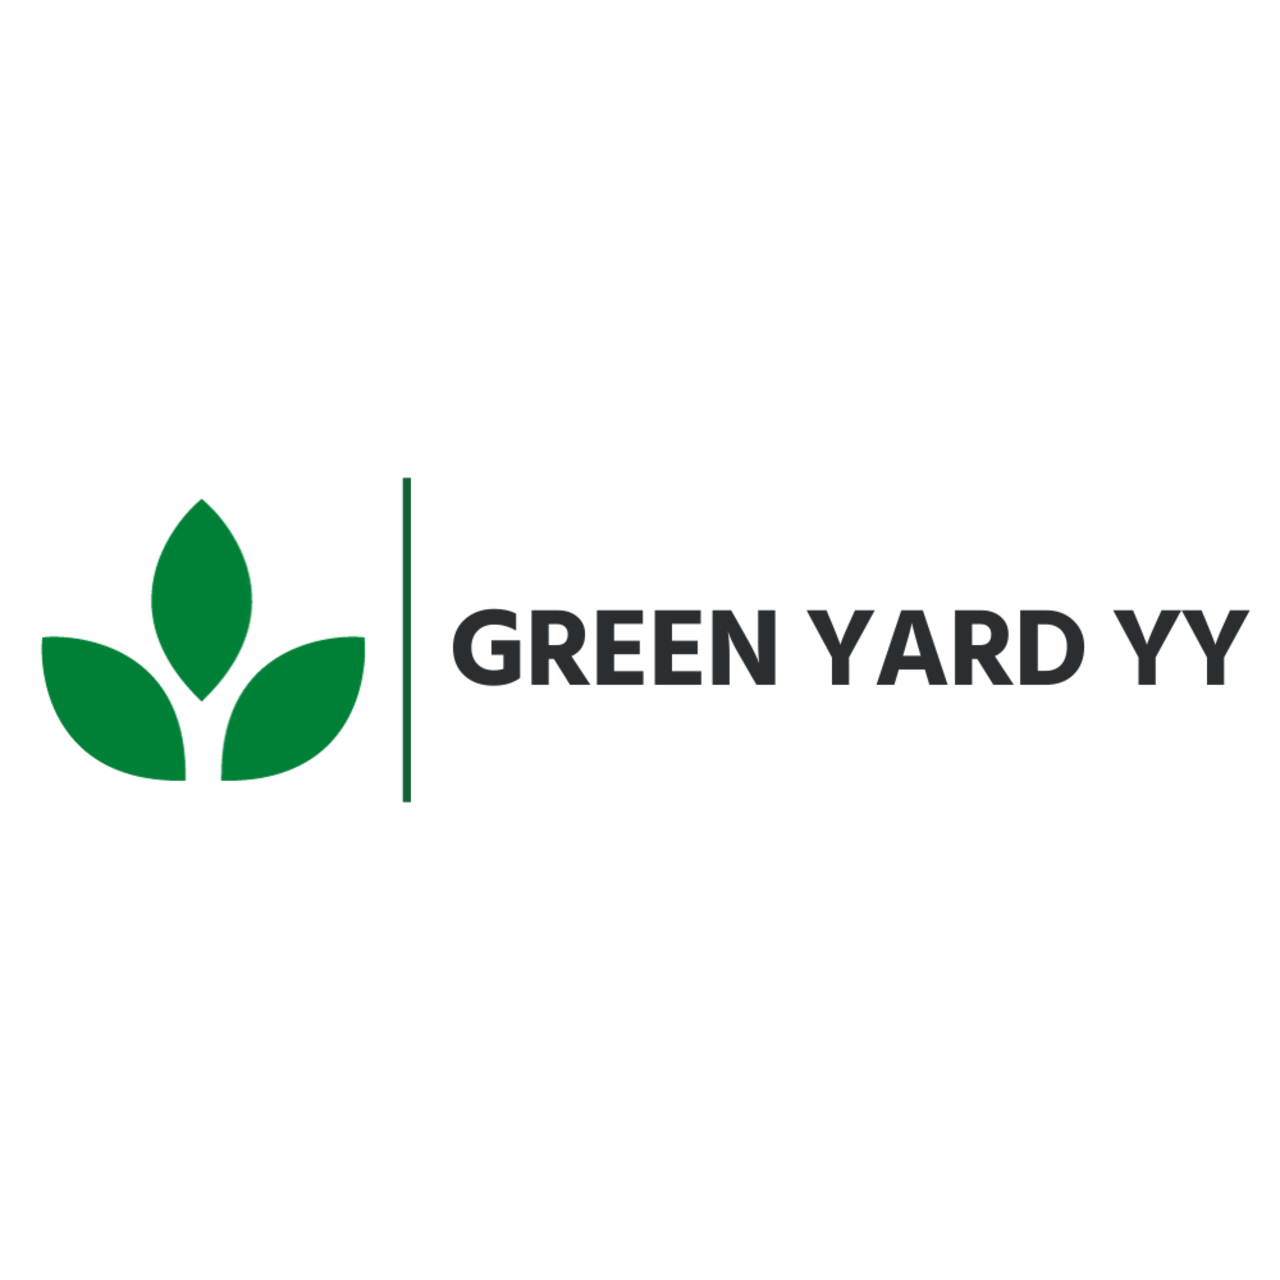 Green Yard YY's logo